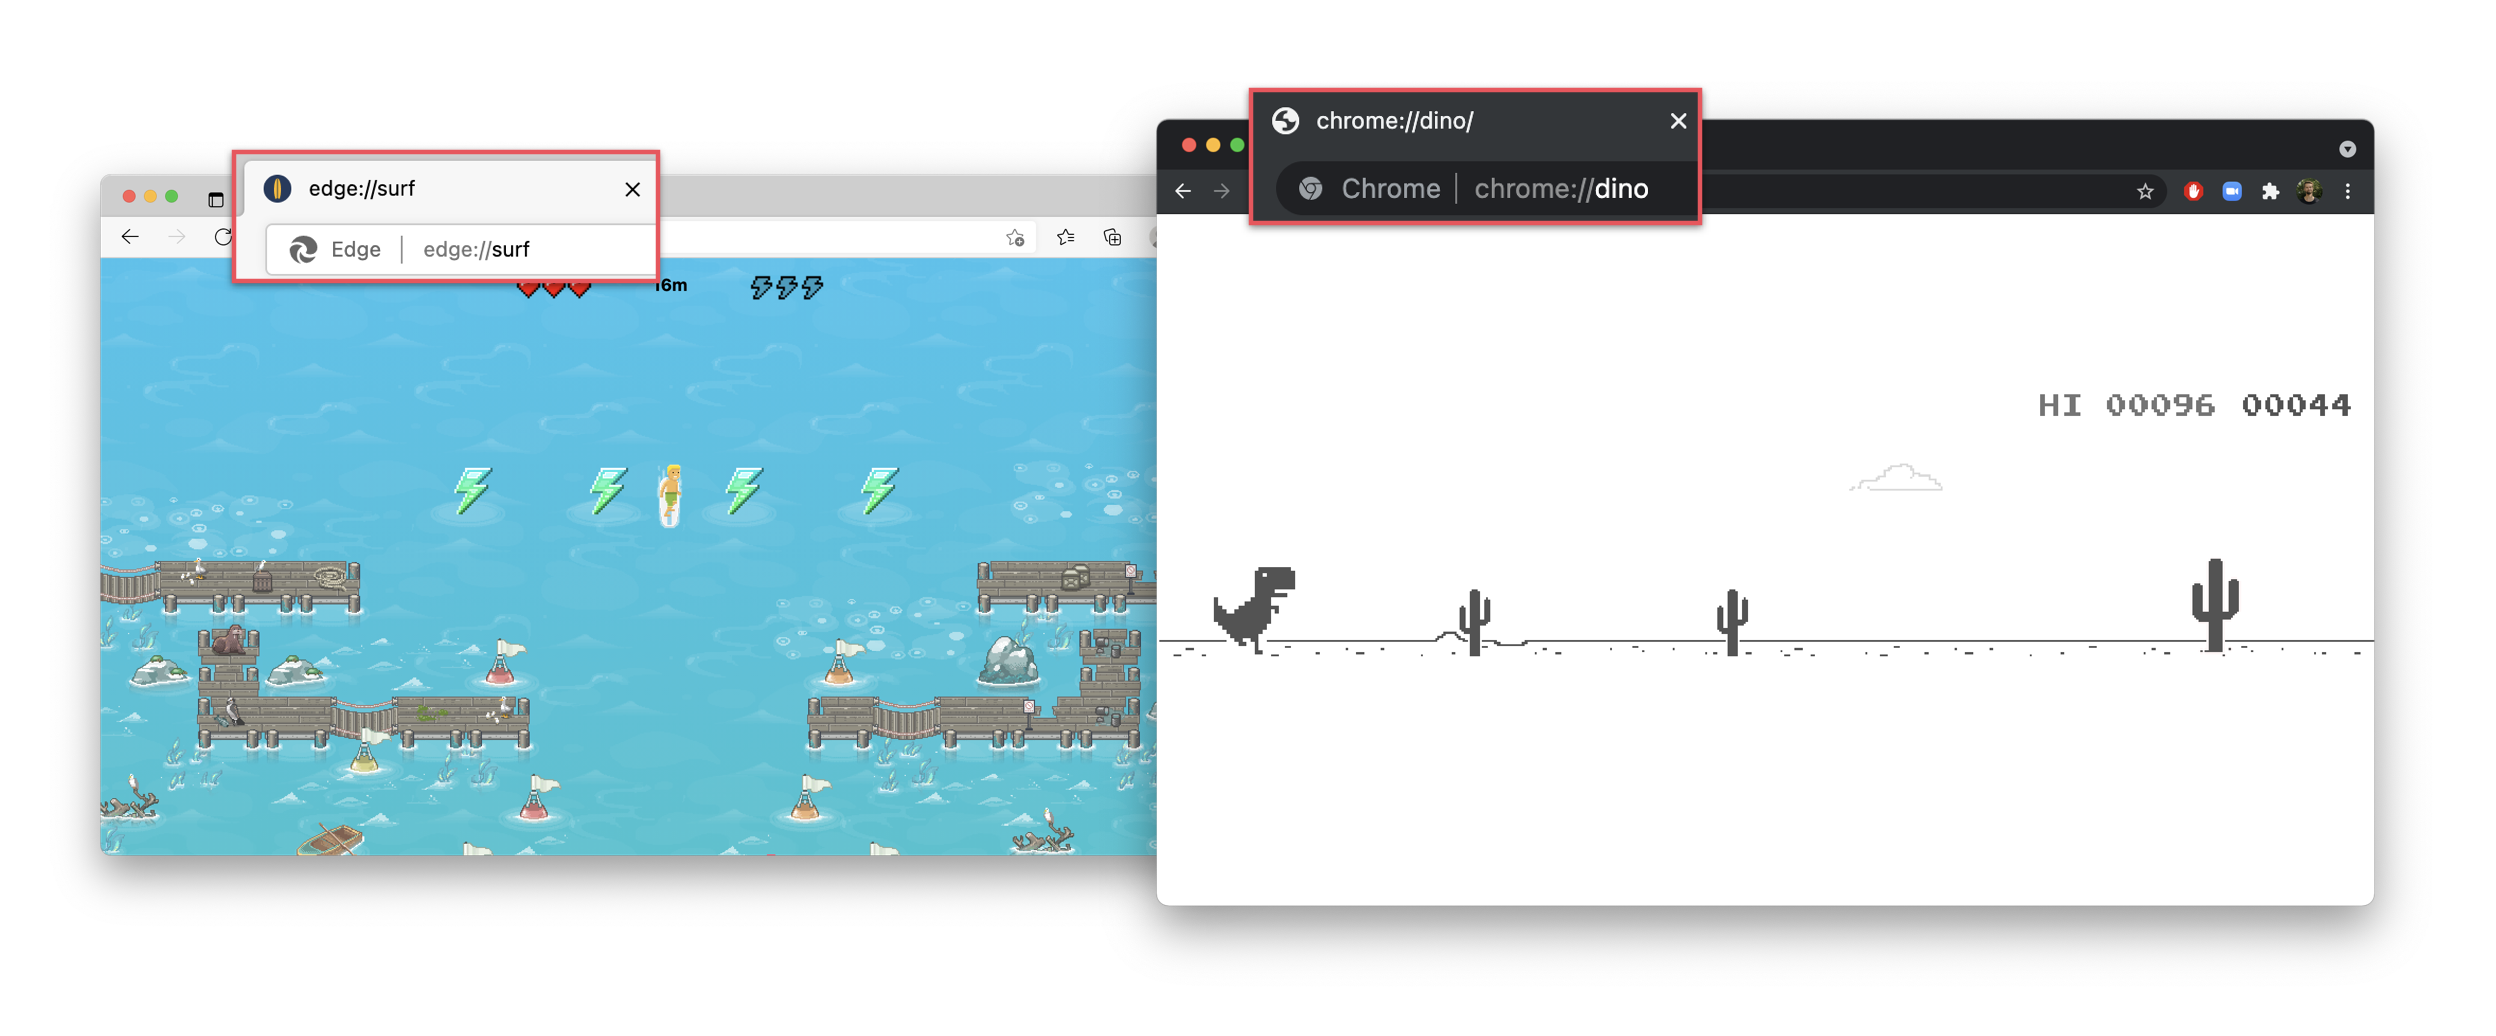 edge:surf and chrome:dino screenshots